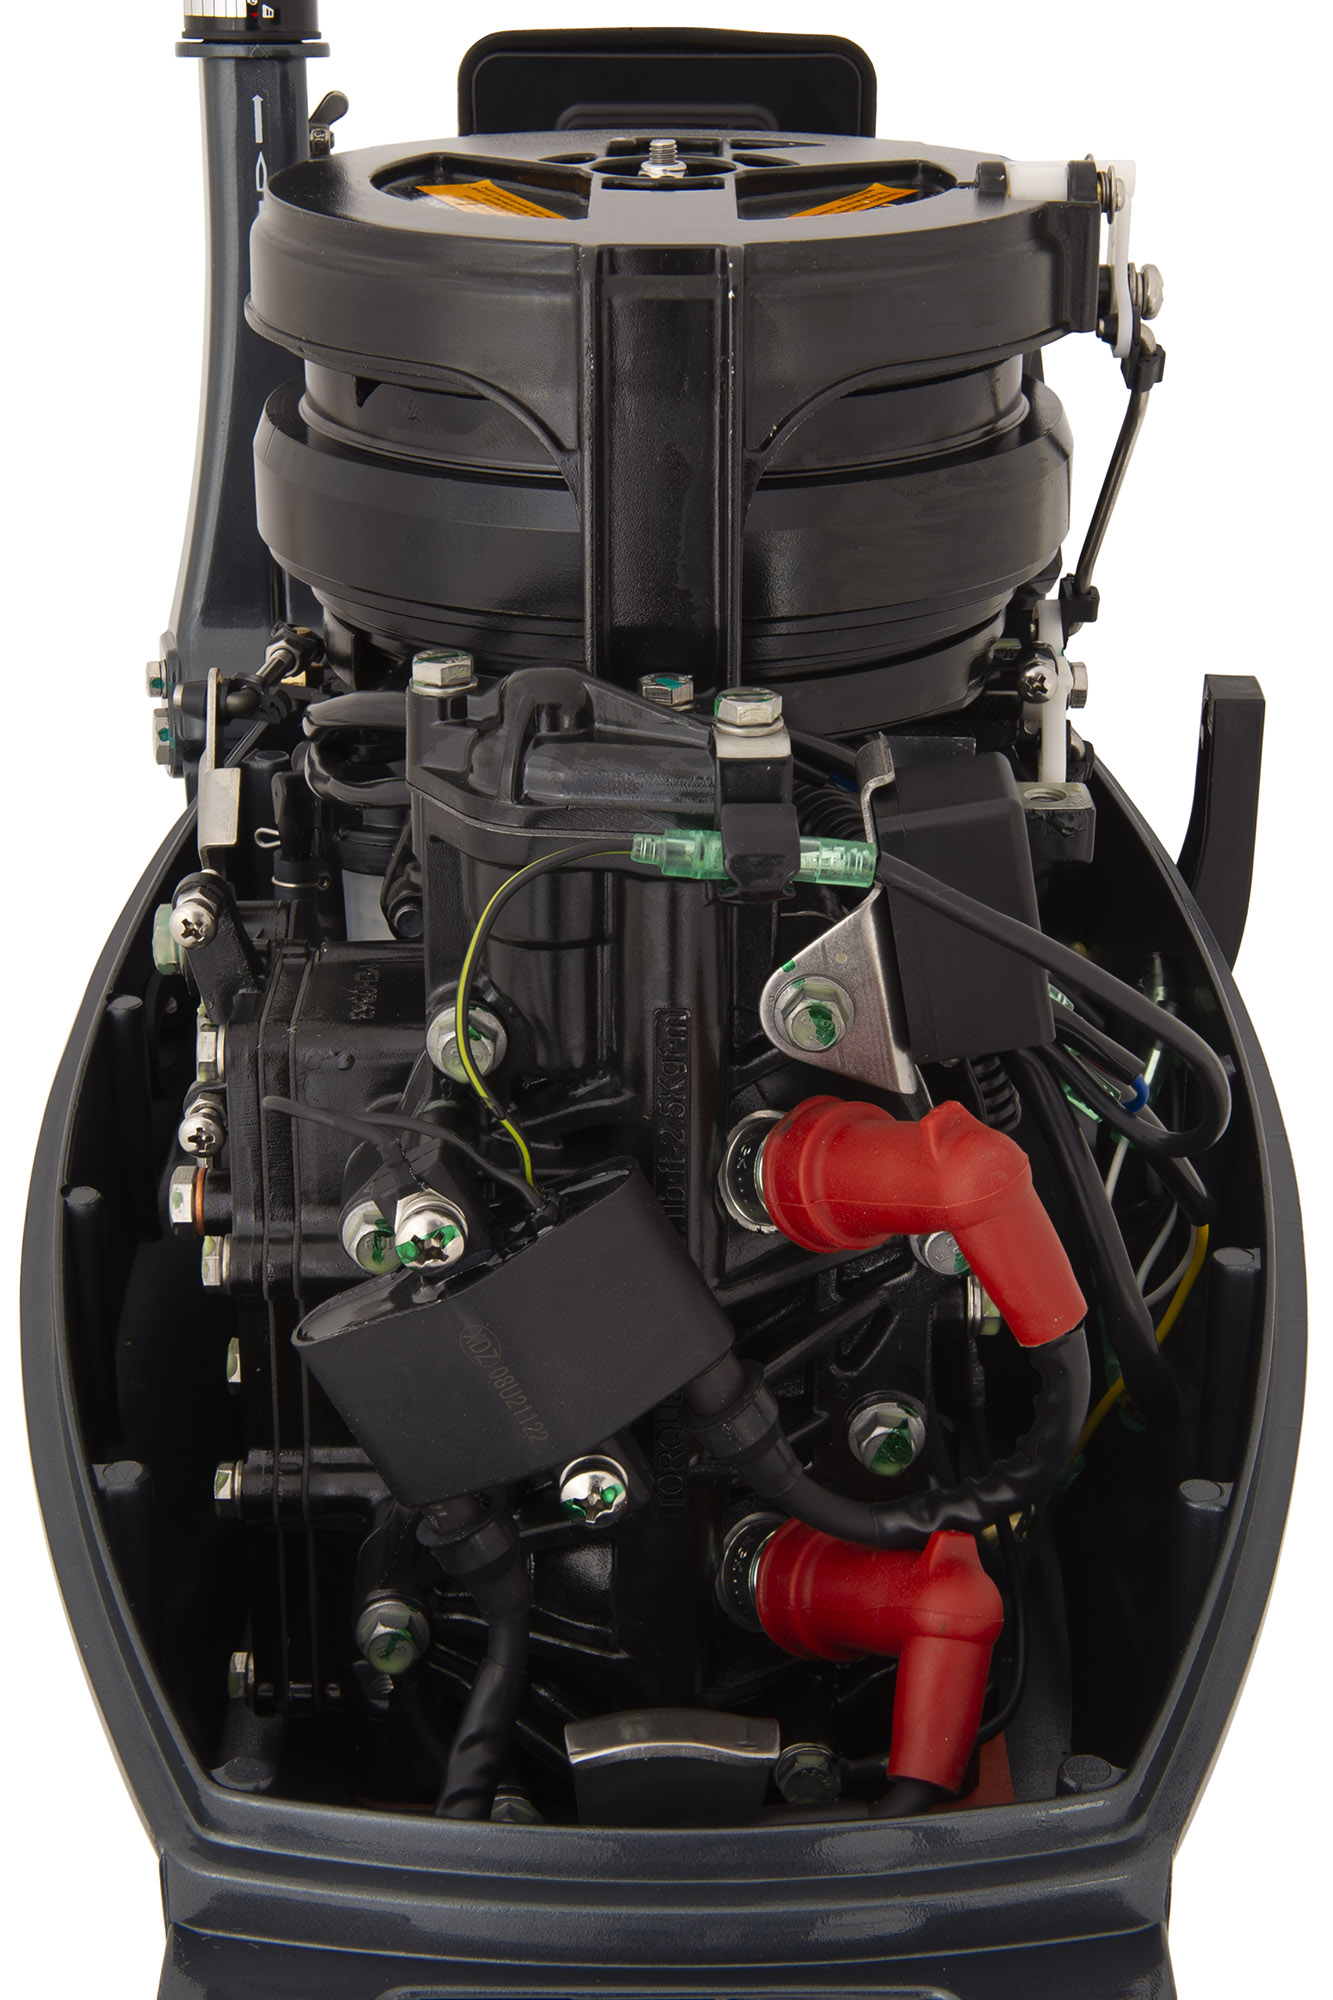 Мотор Seanovo SN 9.9 FHS Enduro